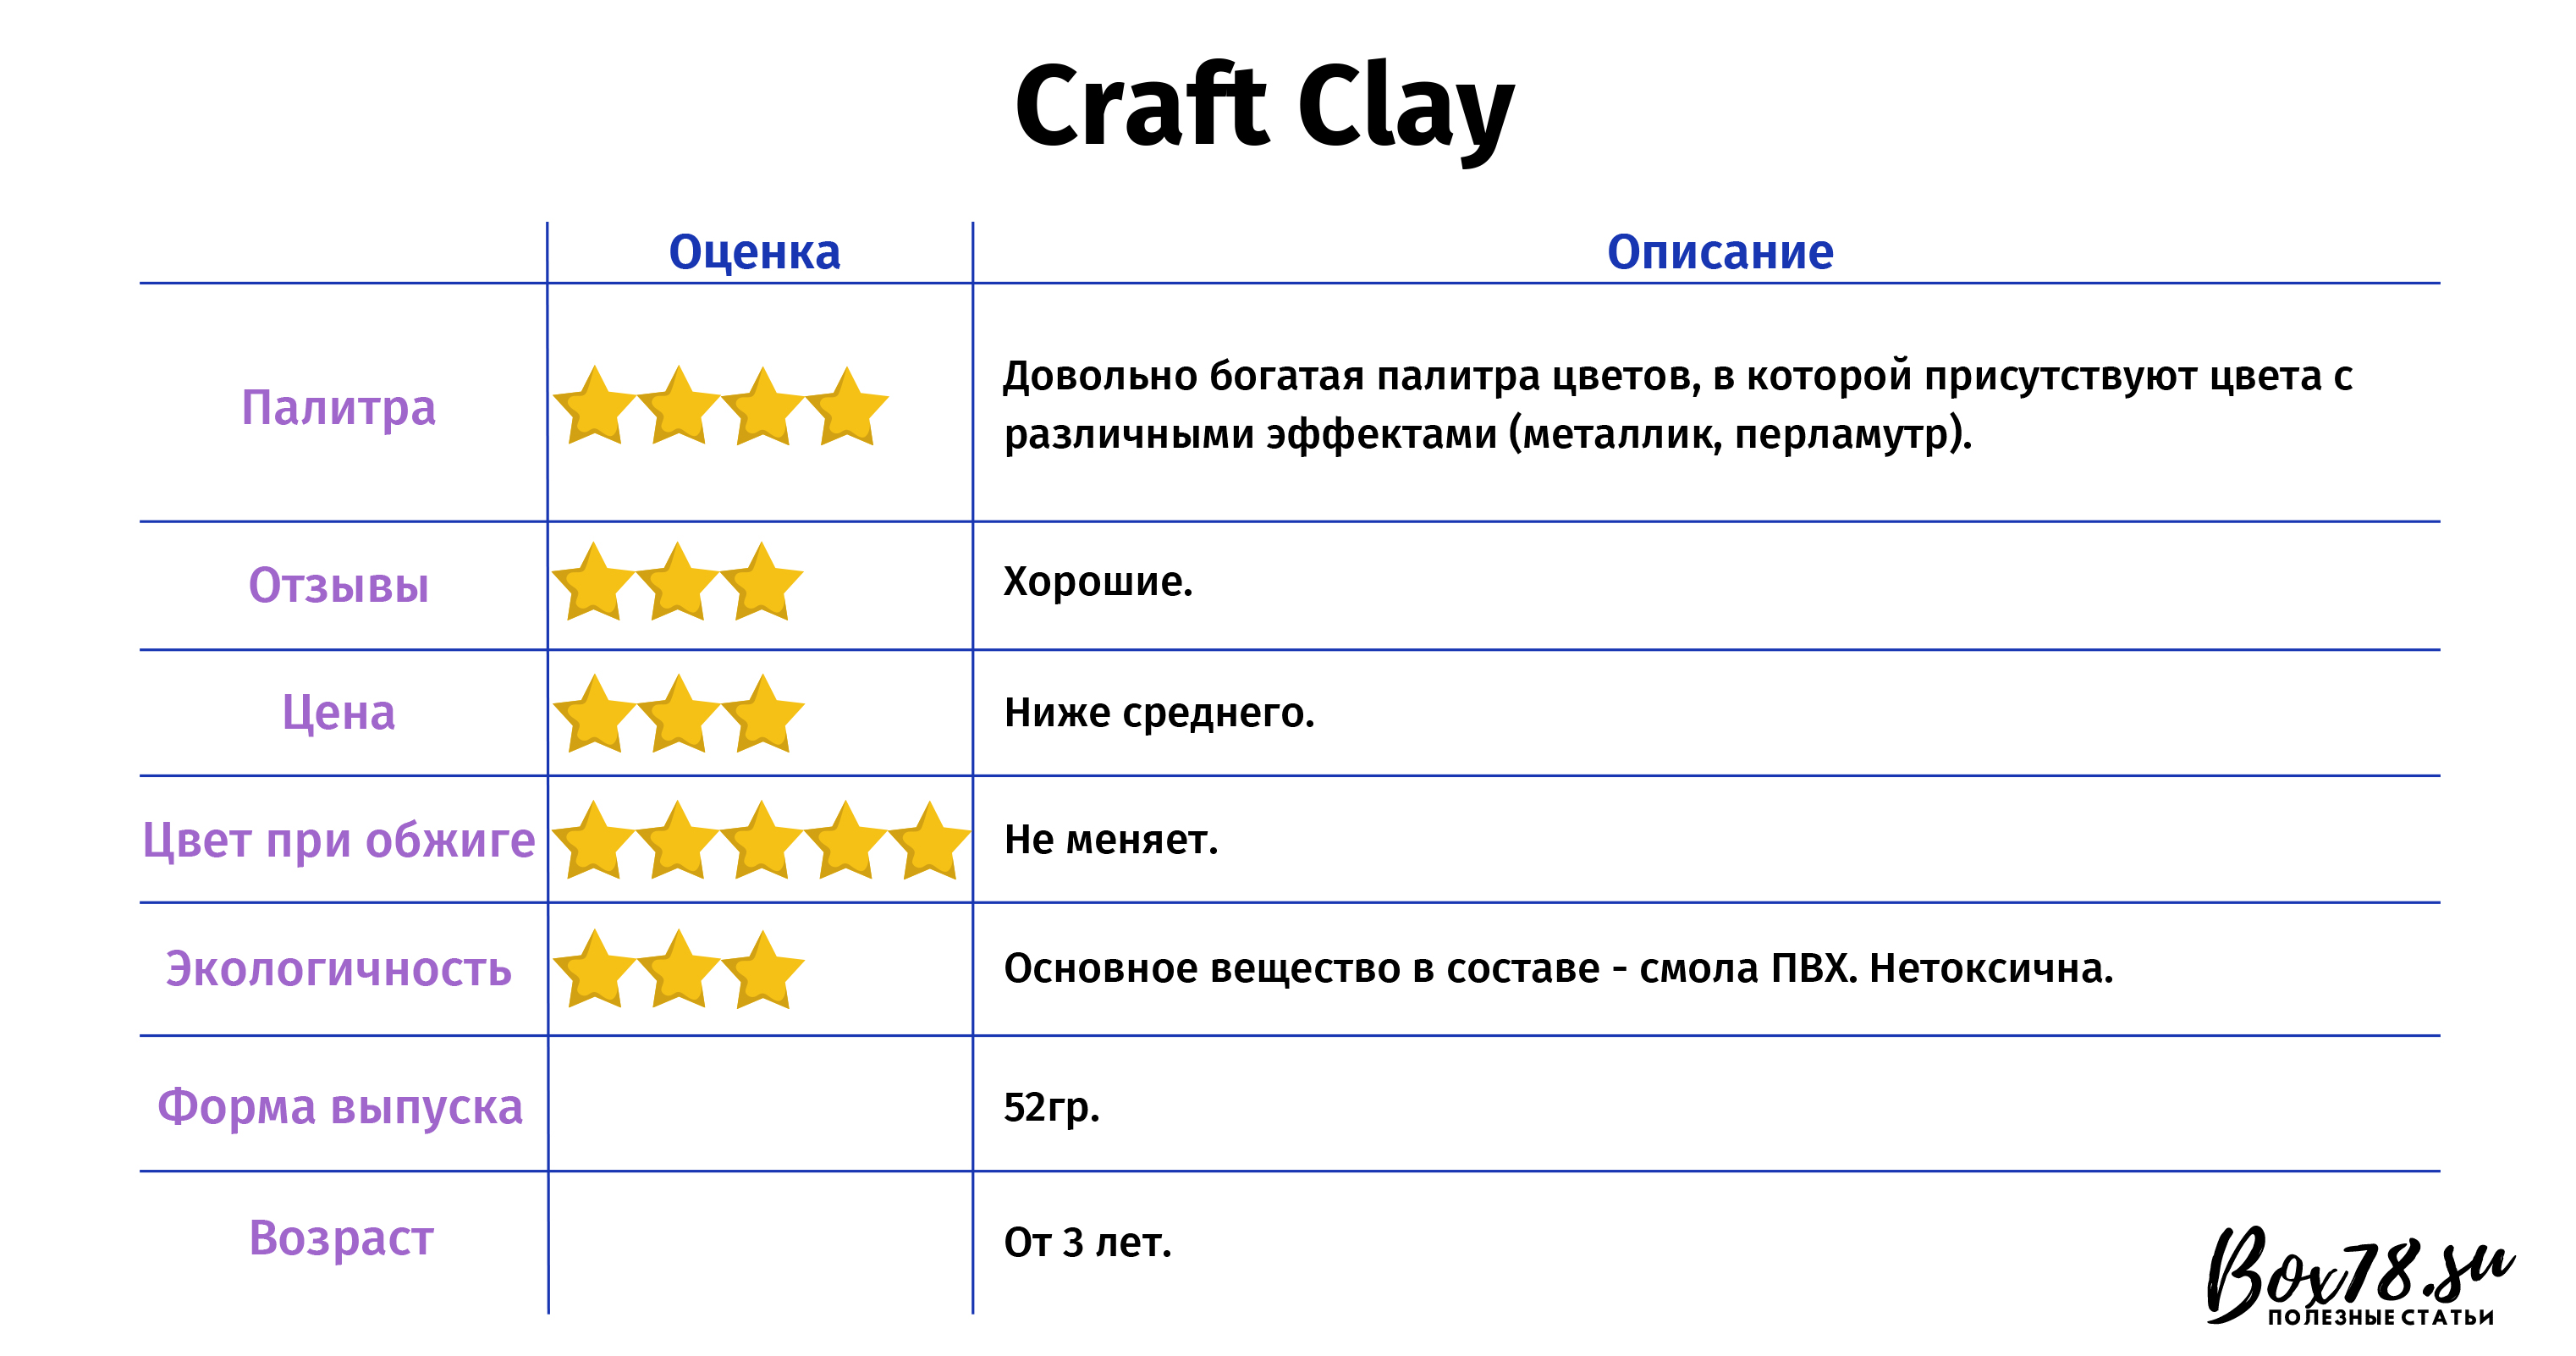 Craft Clay.jpg